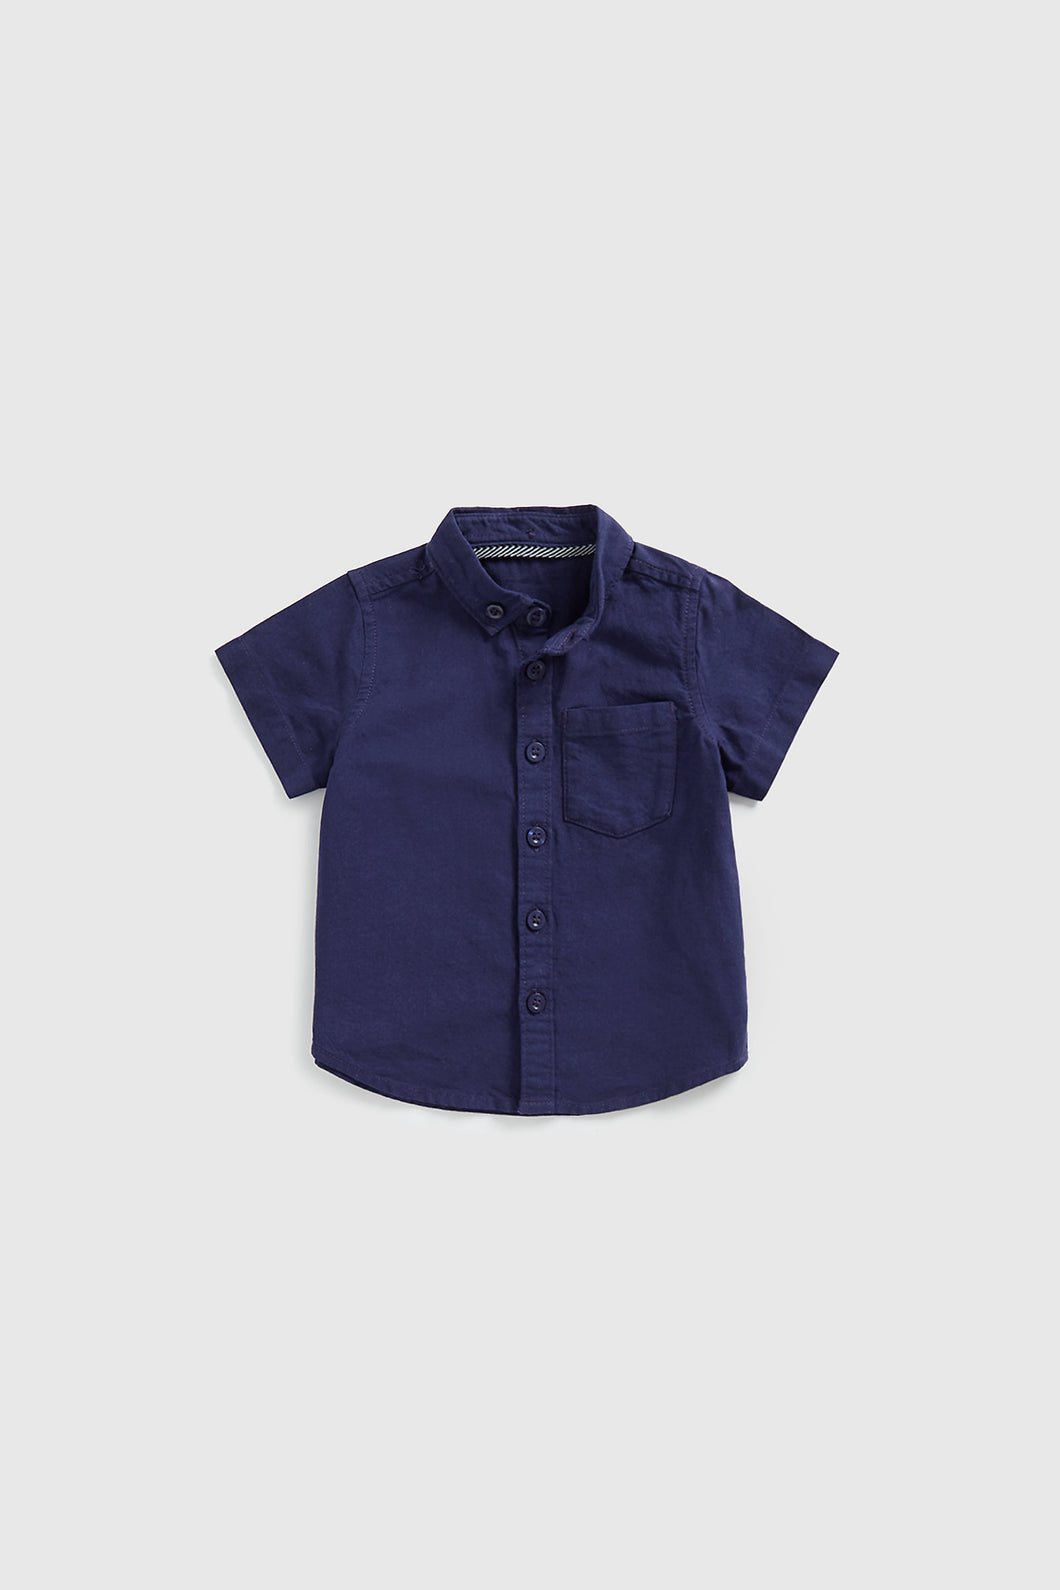 Mothercare Navy Oxford Shirt